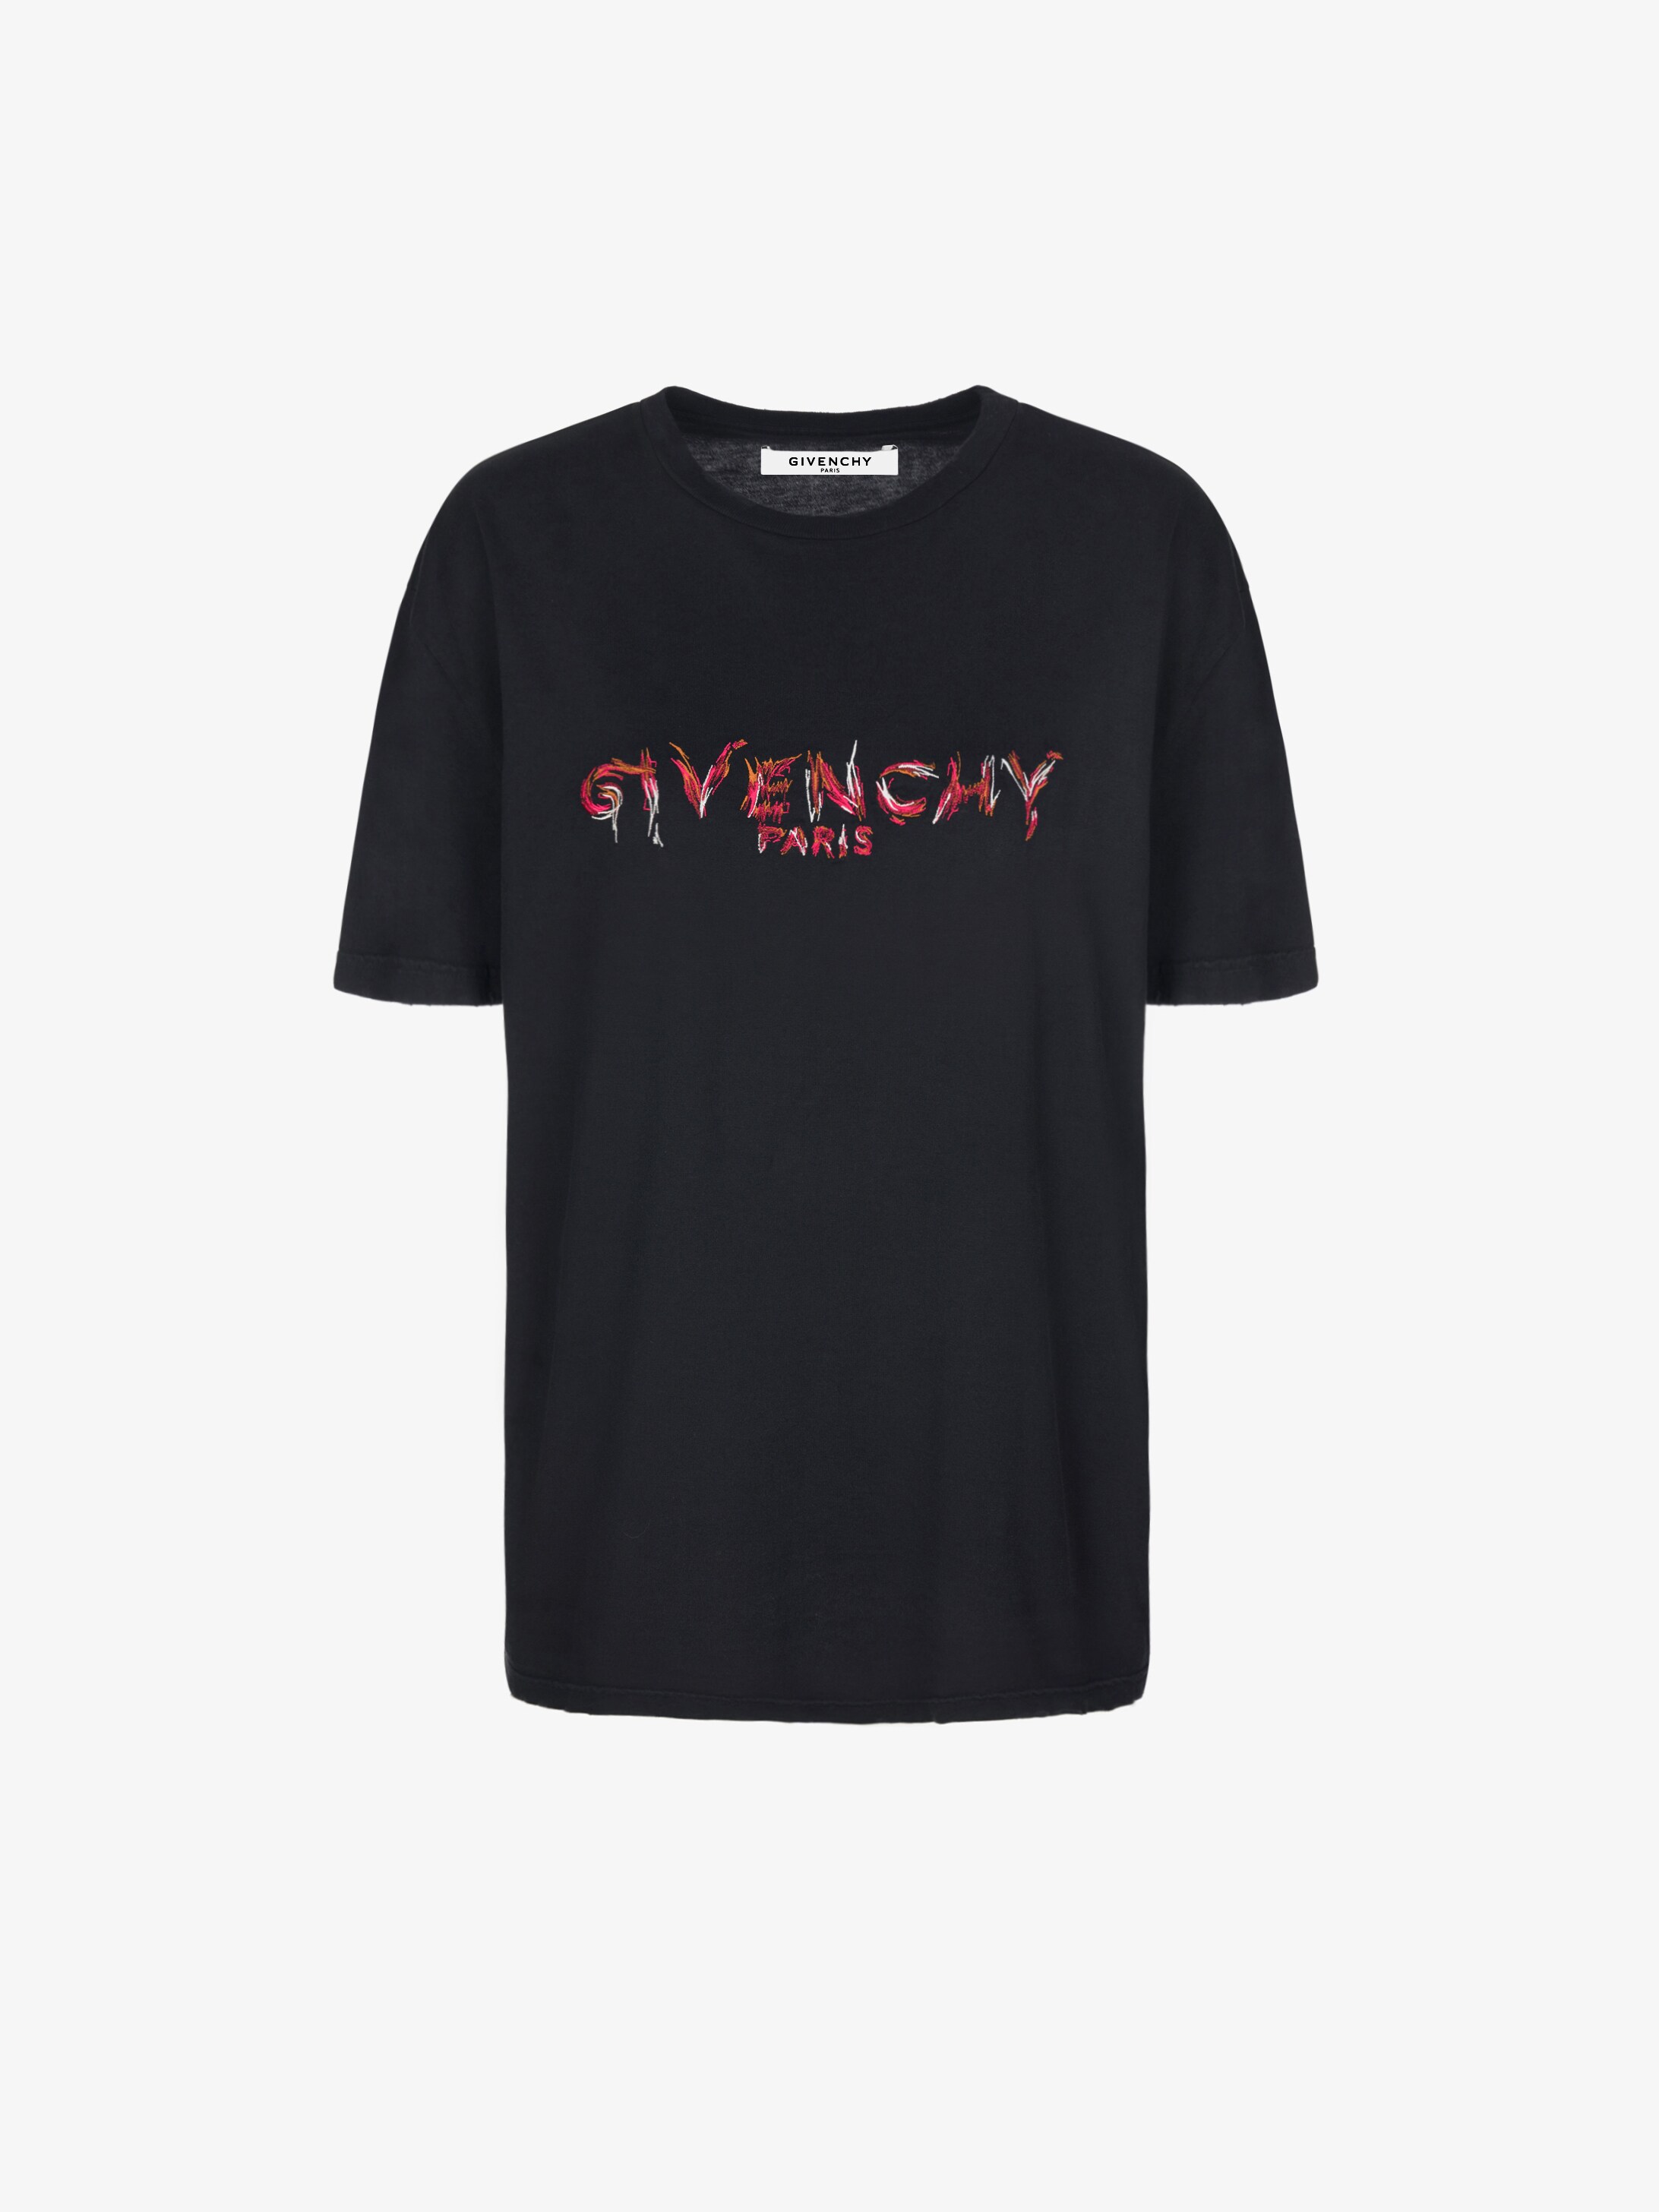 GIVENCHY PARIS printed oversized T-shirt | GIVENCHY Paris